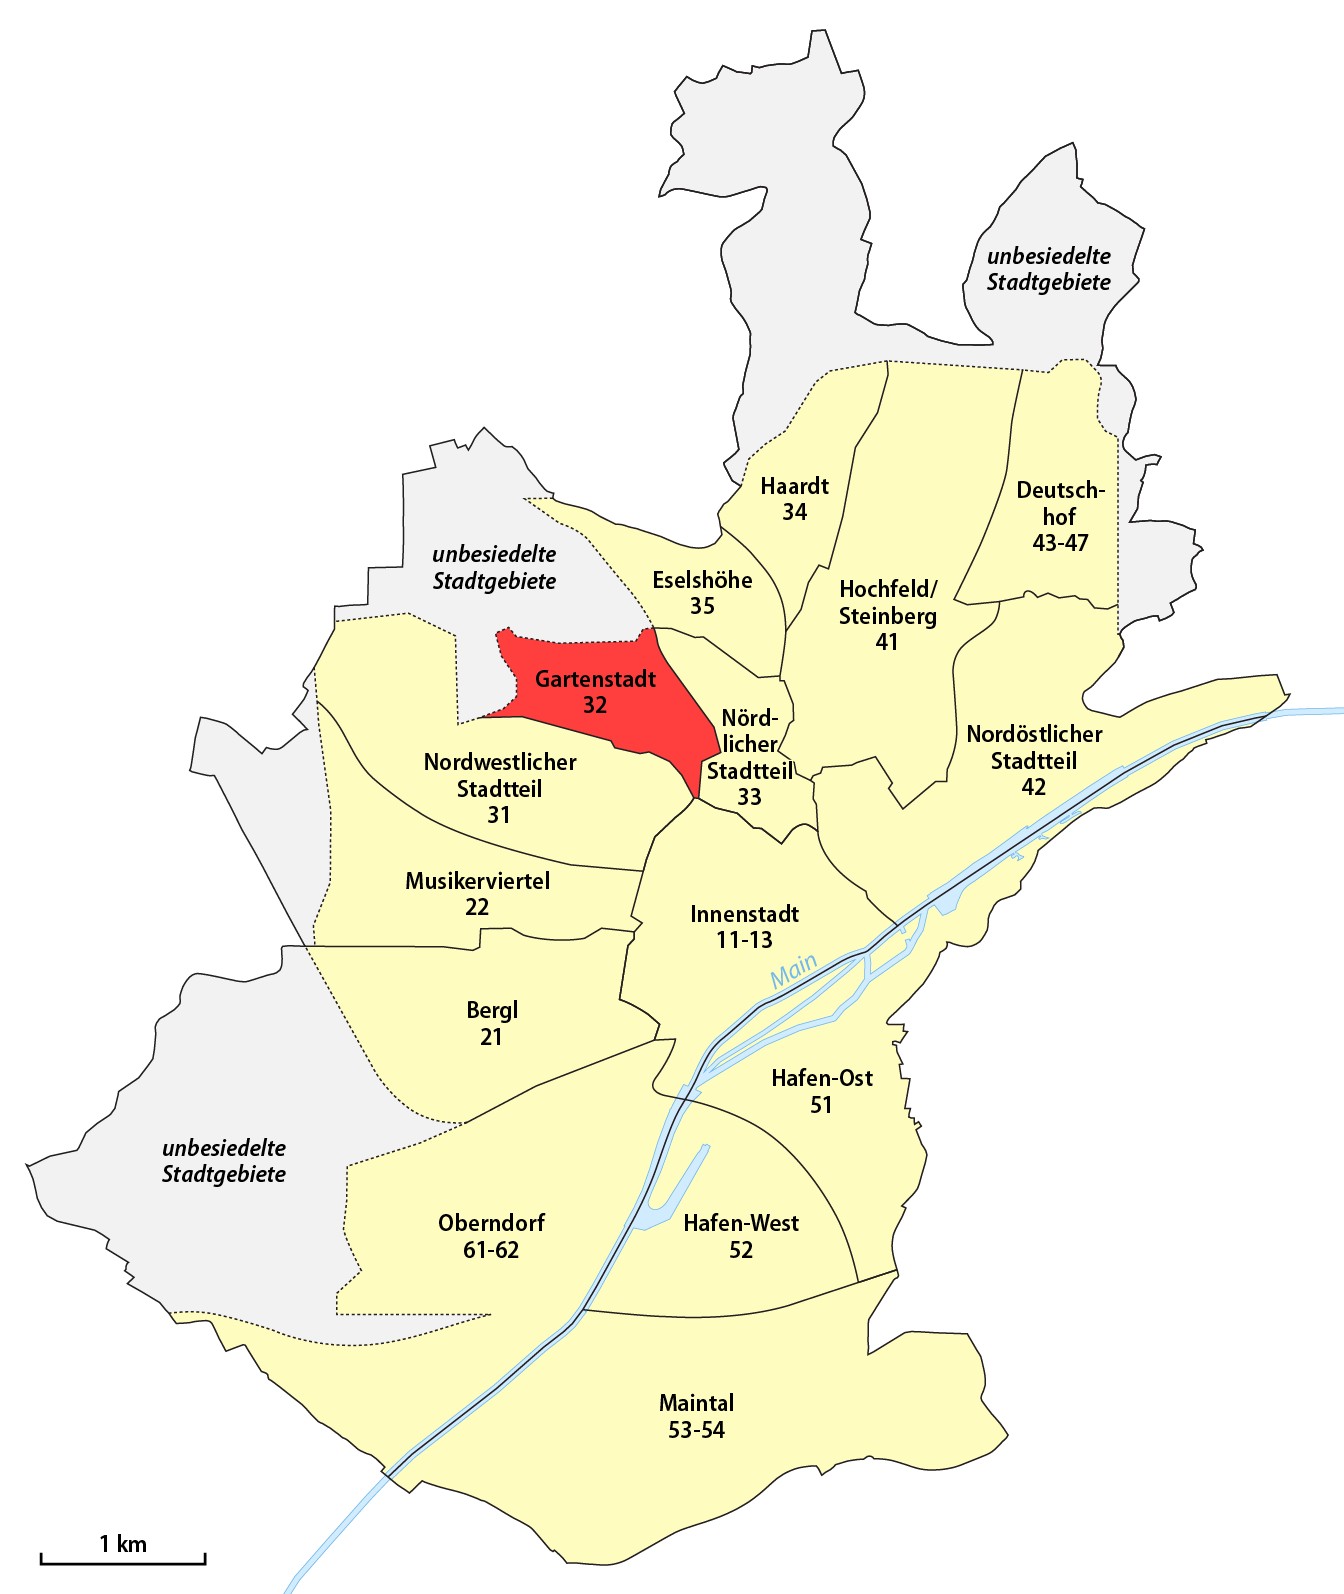 schweinfurt karte File Karte Schweinfurt Stadtteil 32 Gartenstadt Png Wikimedia Commons schweinfurt karte